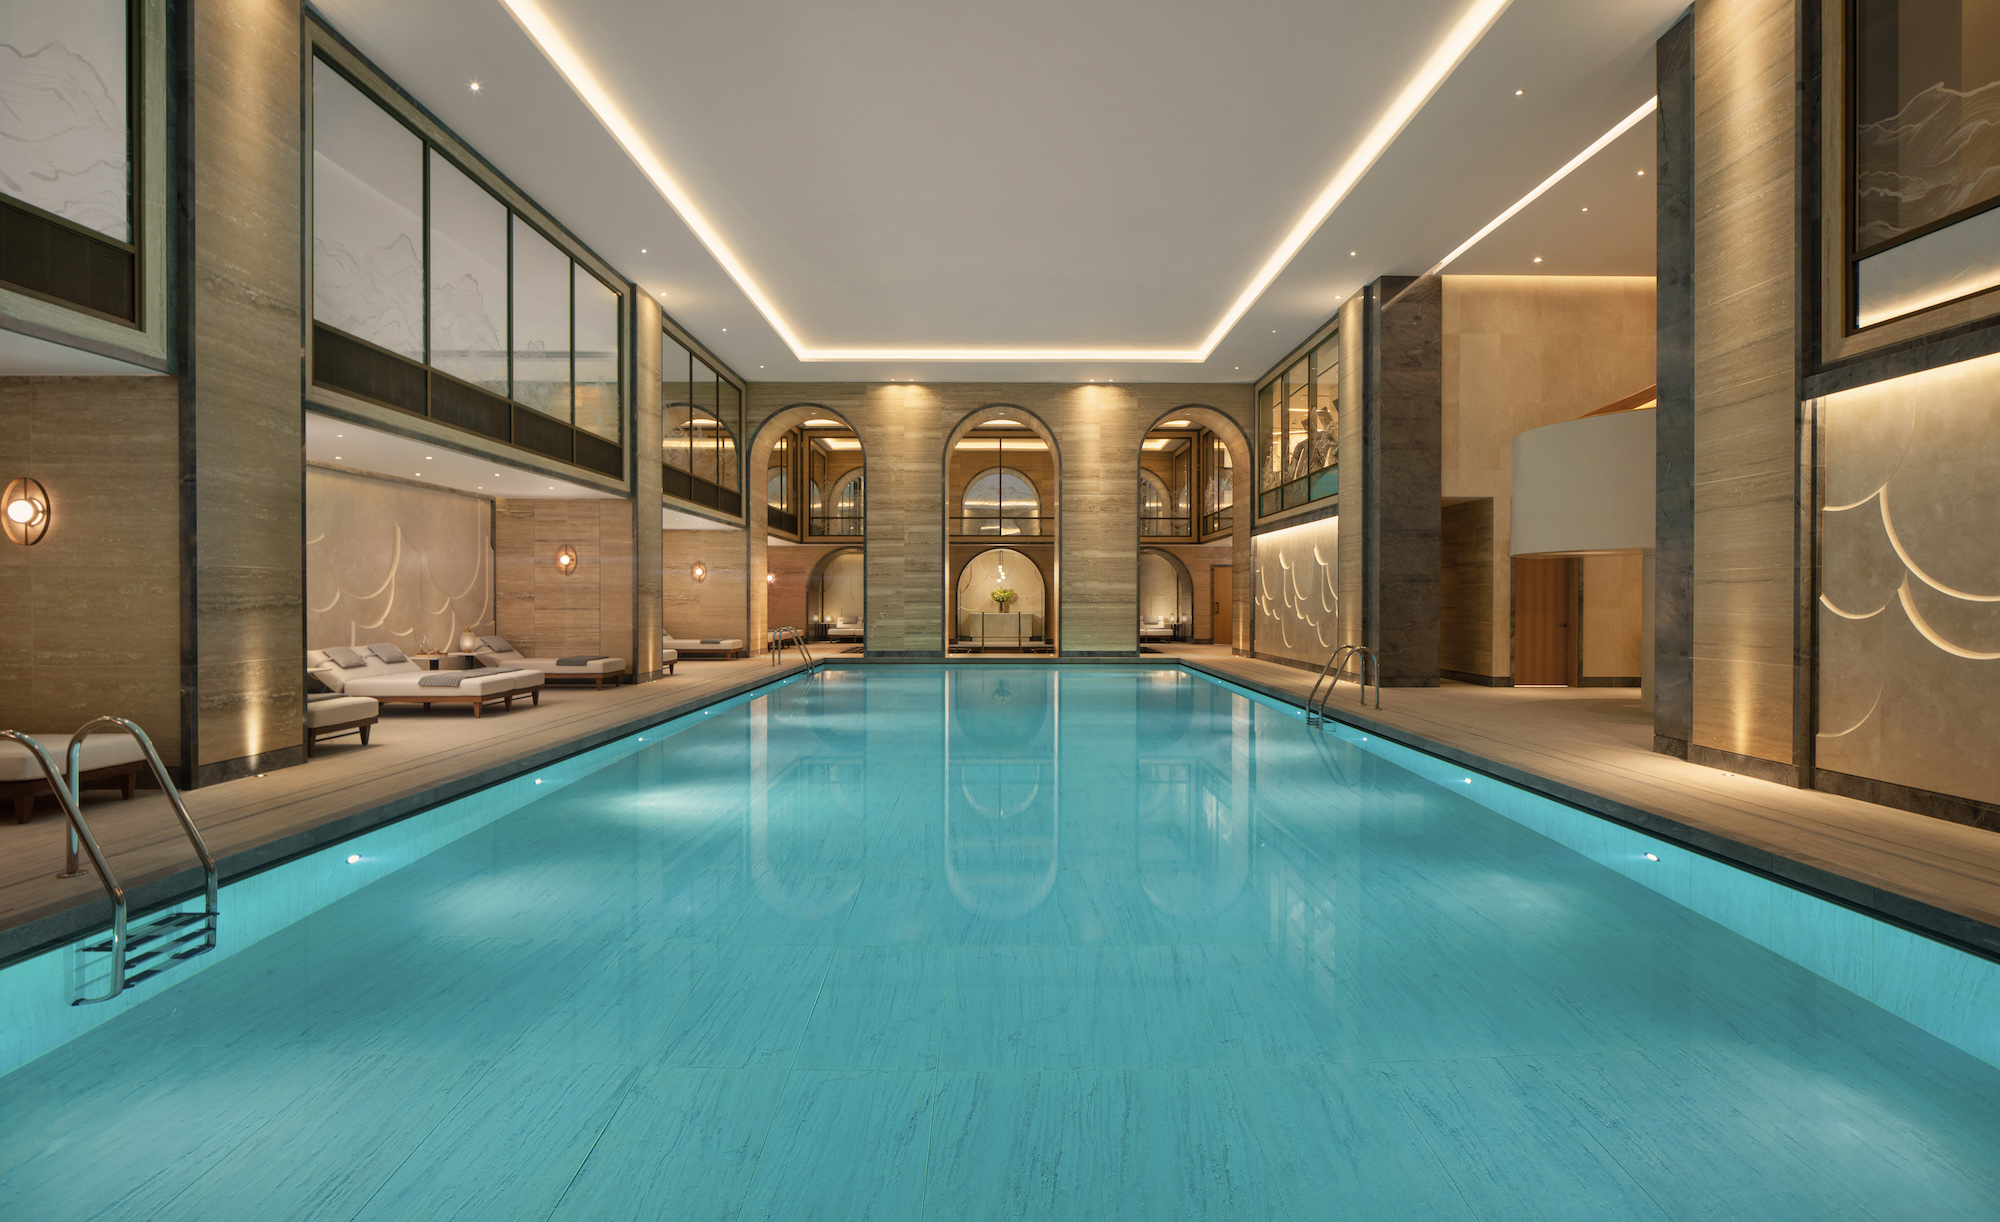 The pool at Raffles London, designed by Goddard Littlefair in Effect Magazine